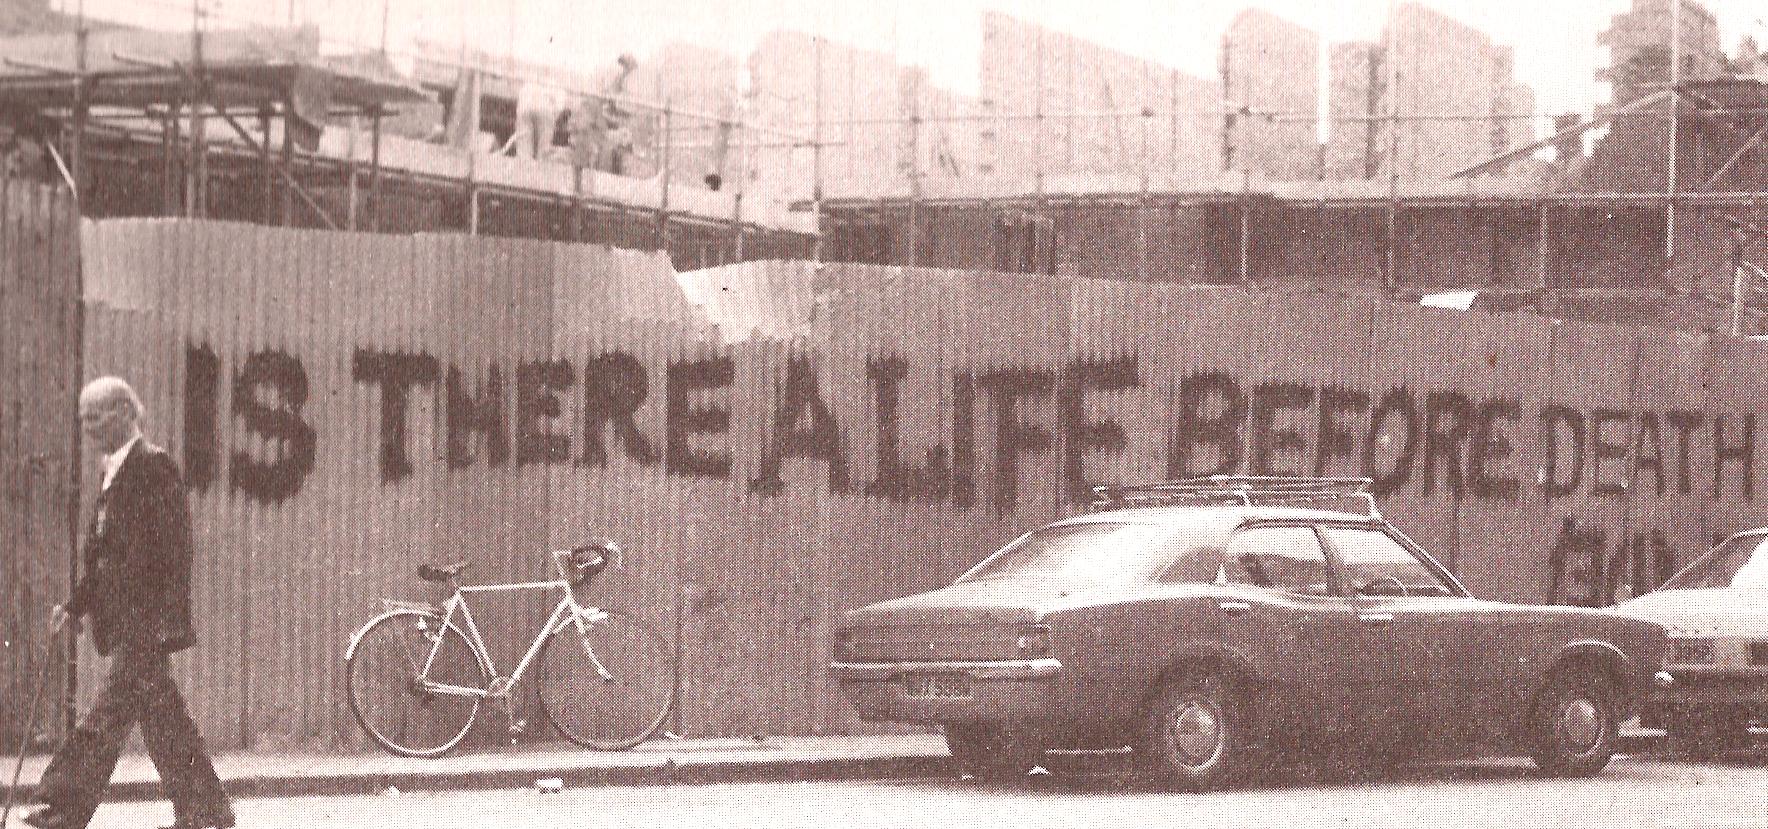 graffiti life before death